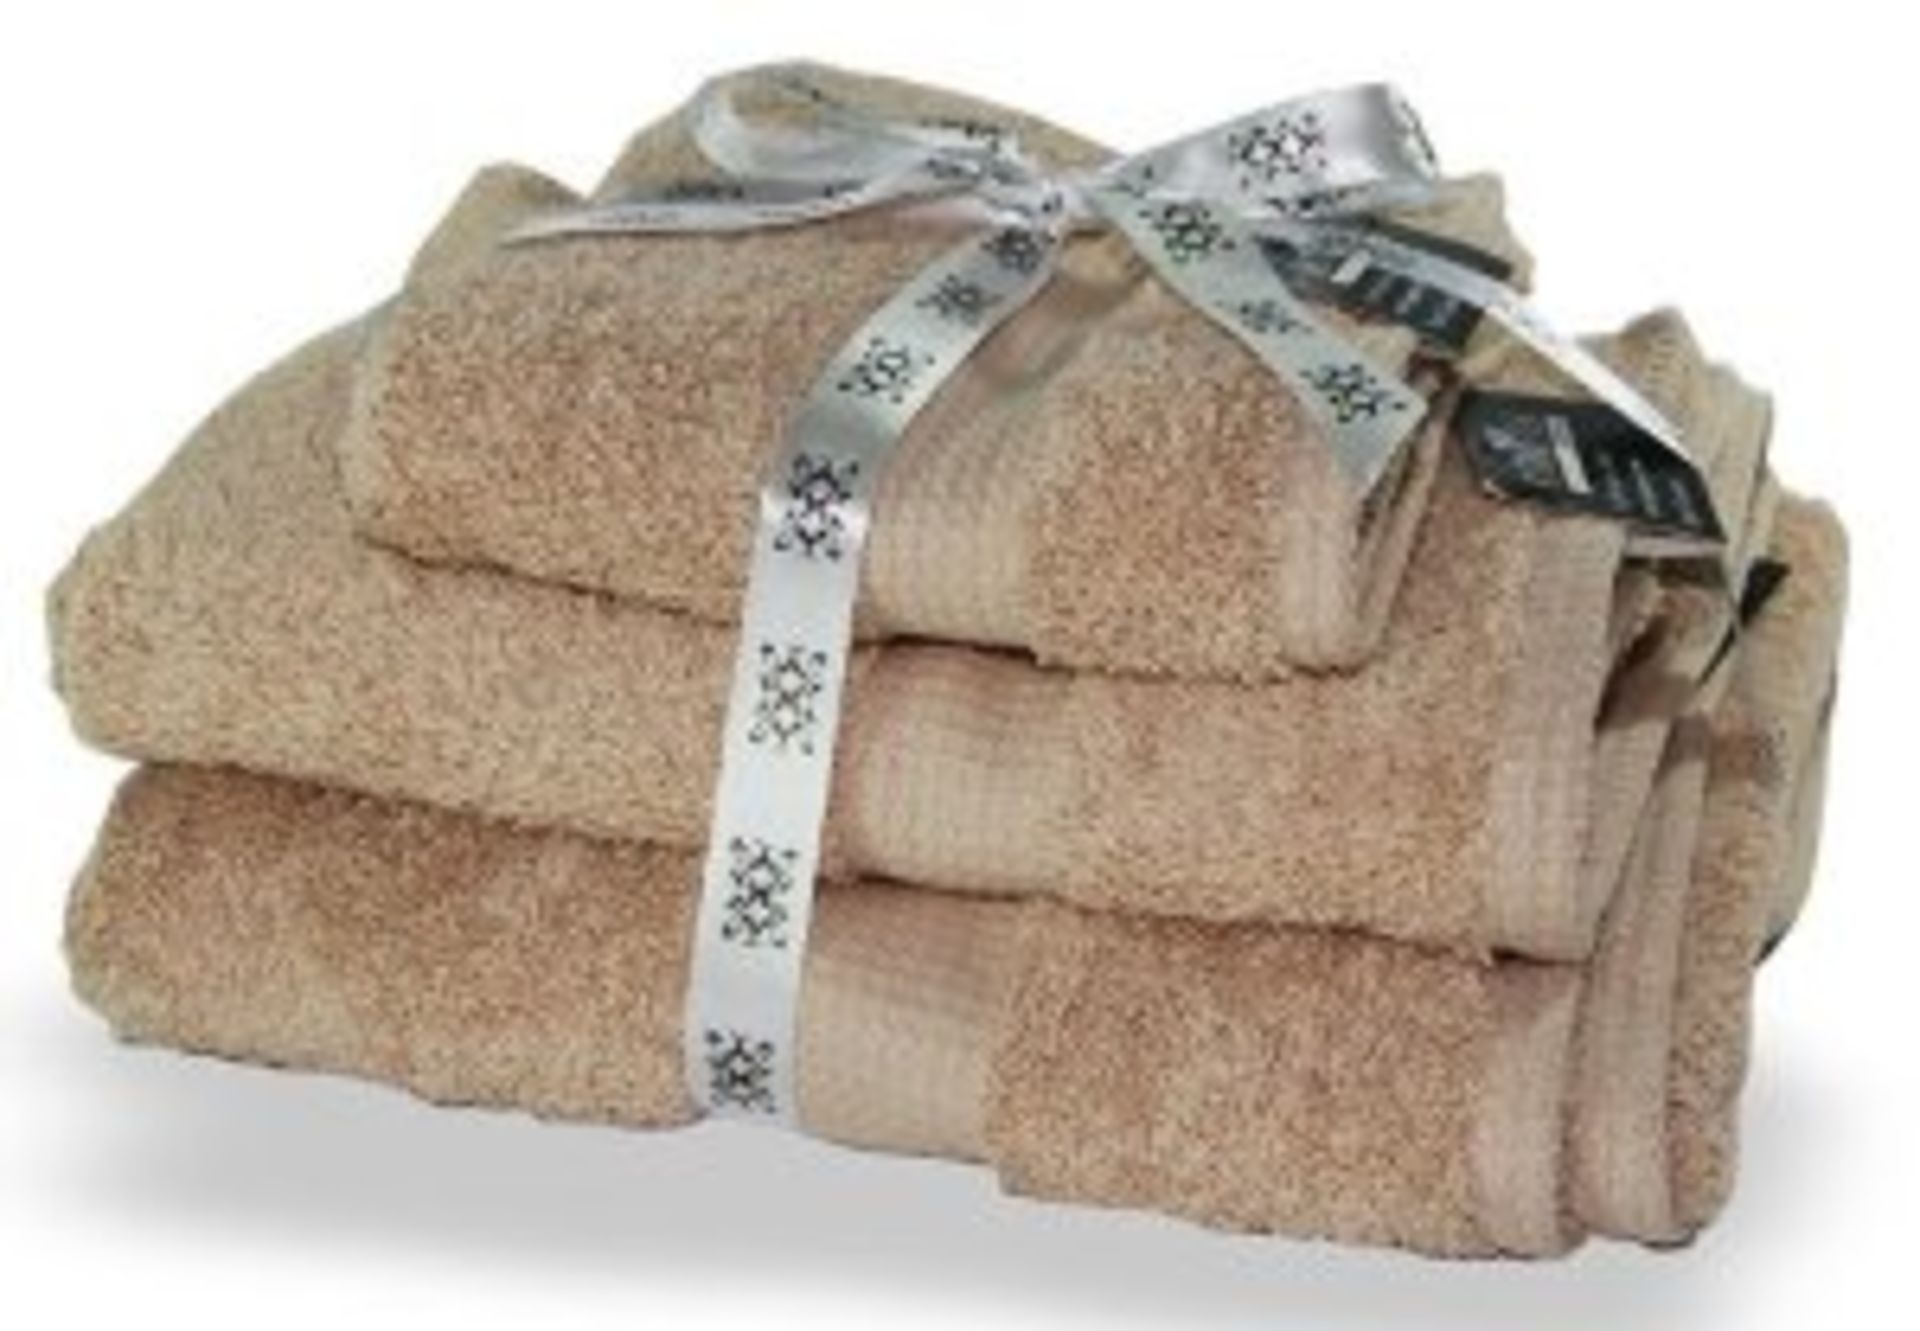 V Brand New Six Piece Latte Towel Bale Set Includes 2 Bath Towels 2 Hand Towels 2 Face Towels - Image 2 of 3